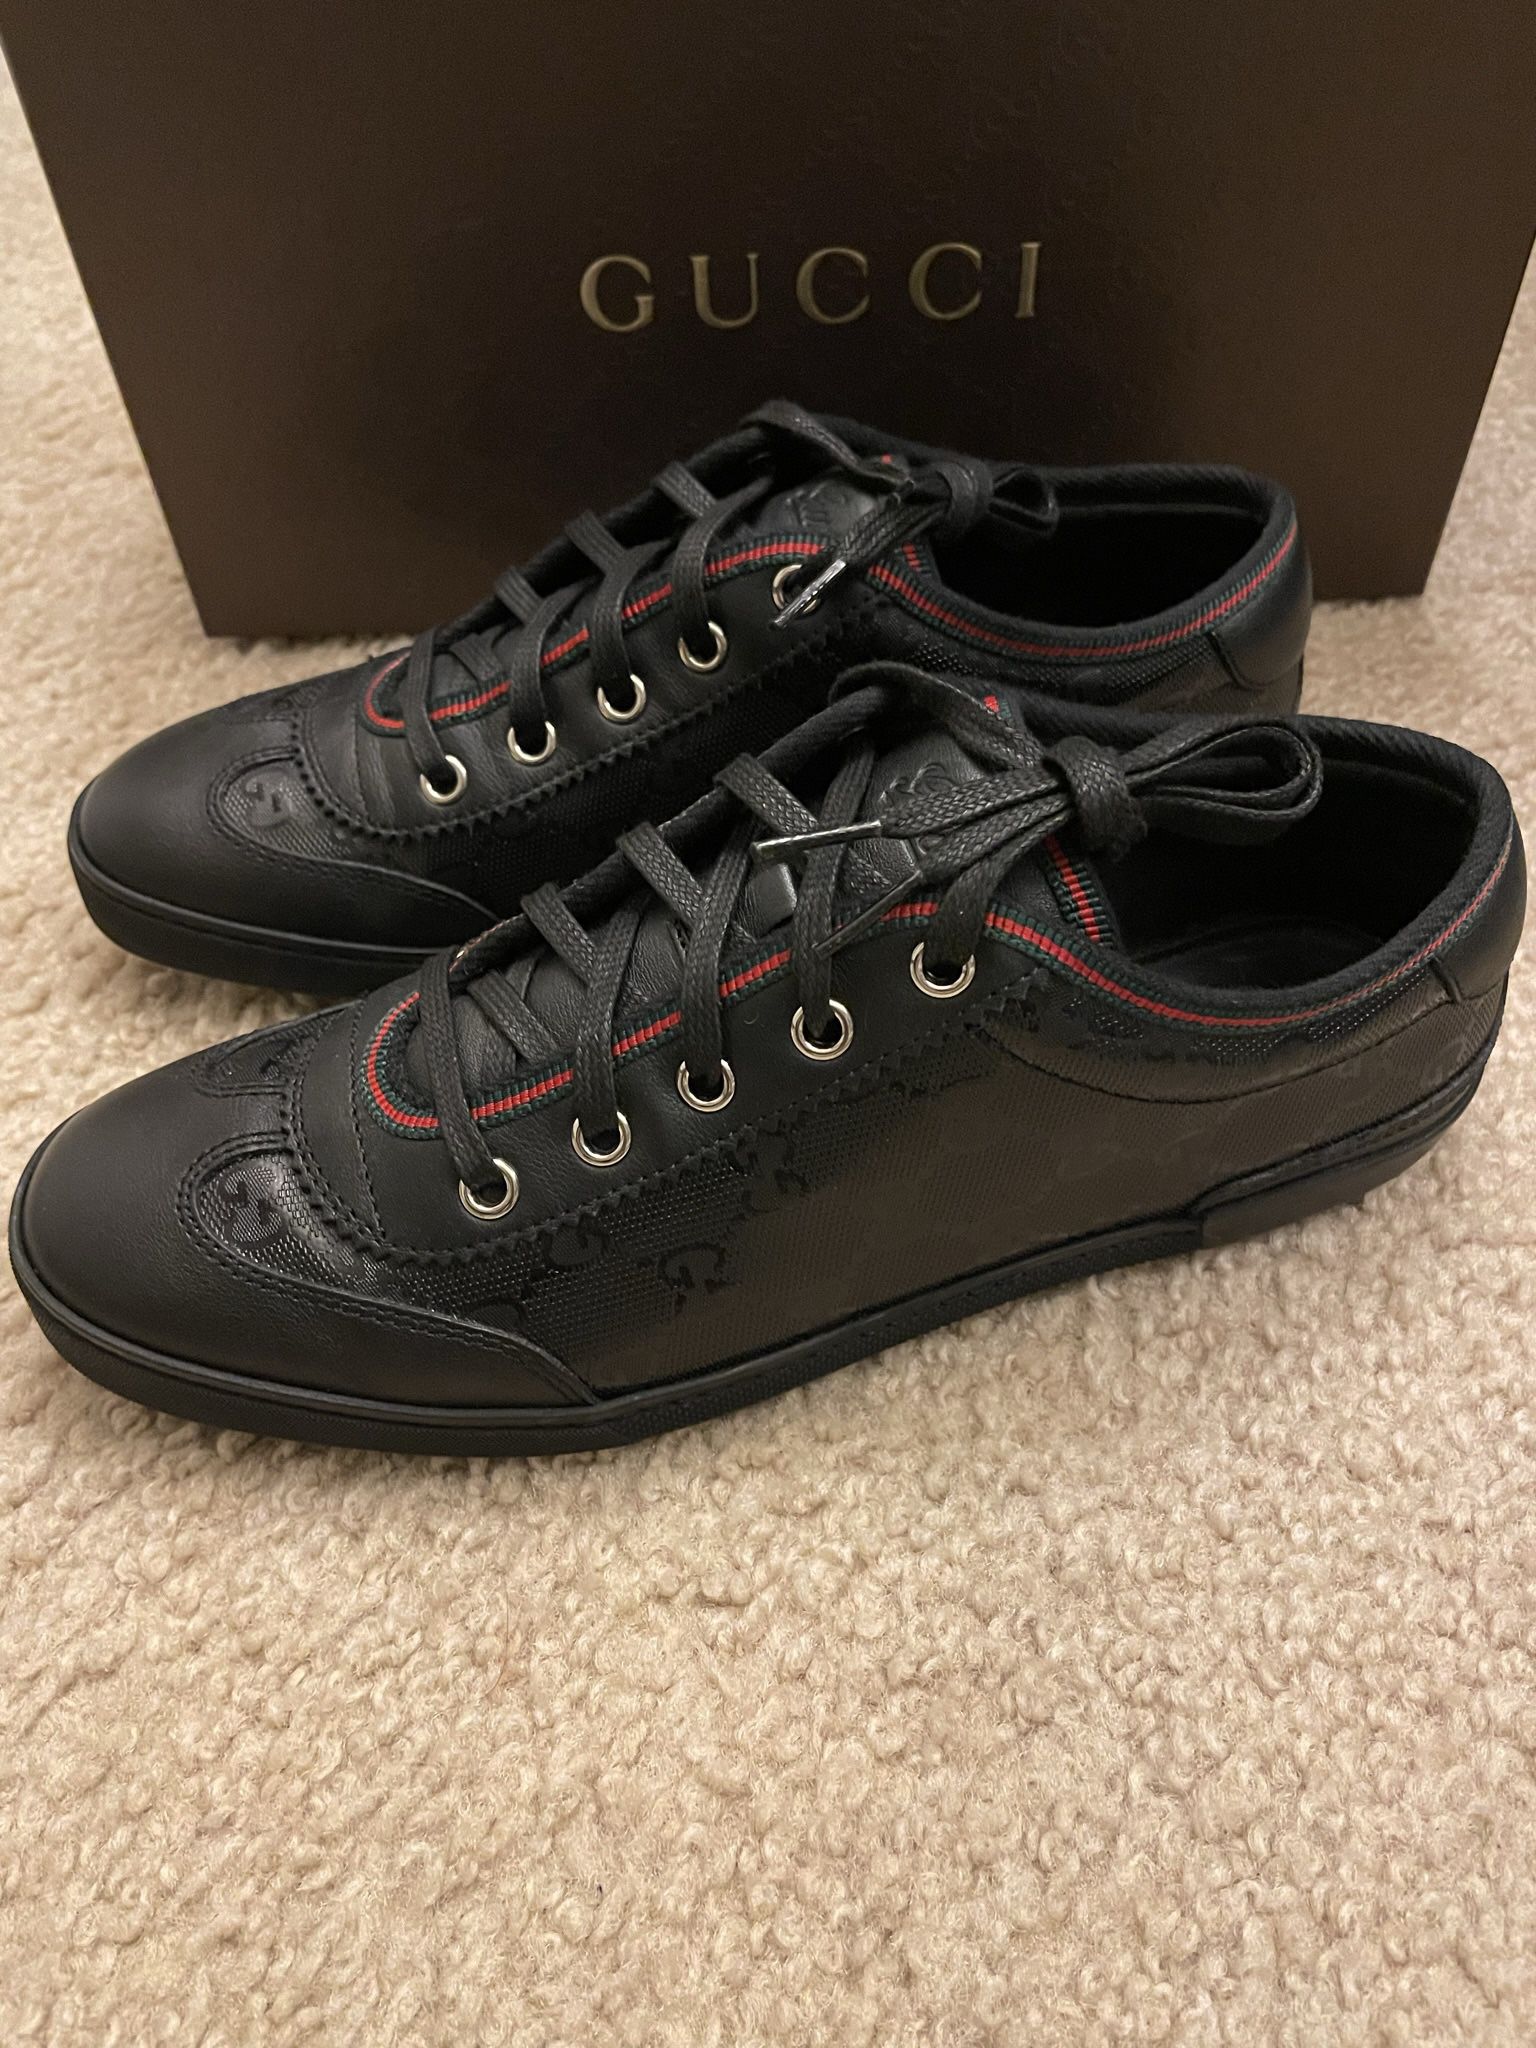 Women Gucci Shoes (size 7)